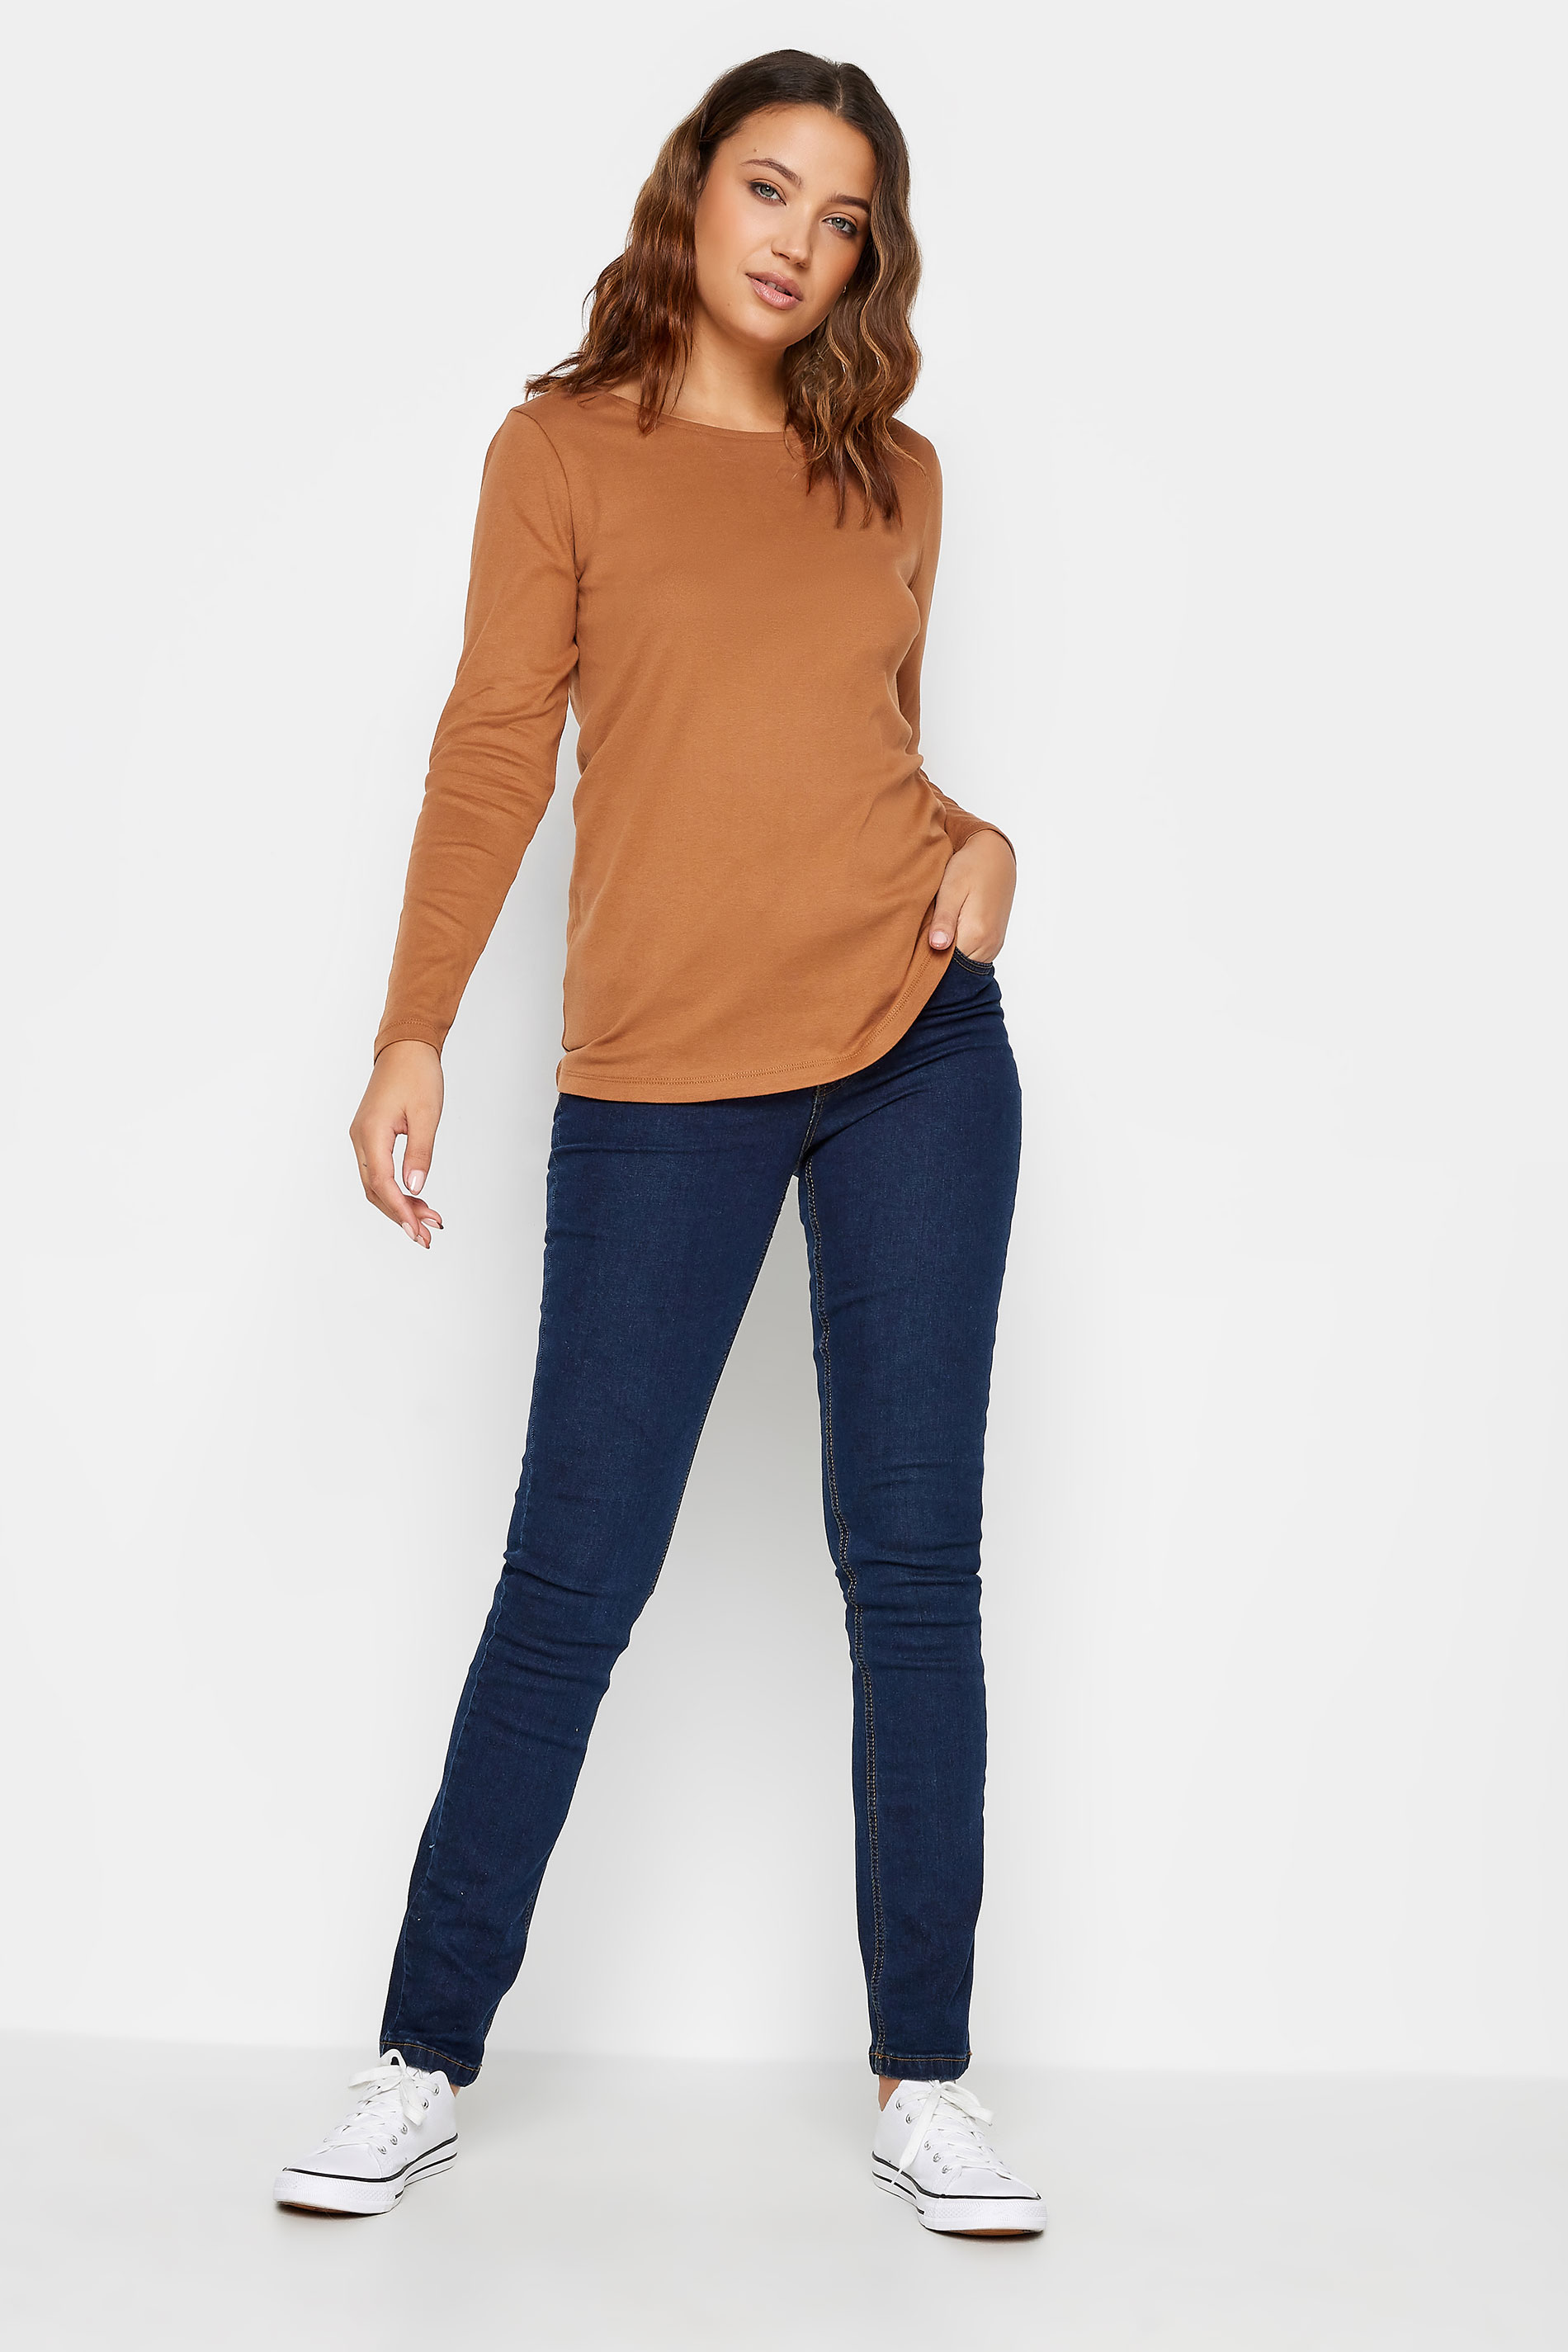 LTS Tall Orange Long Sleeve Cotton T-Shirt | Long Tall Sally  2